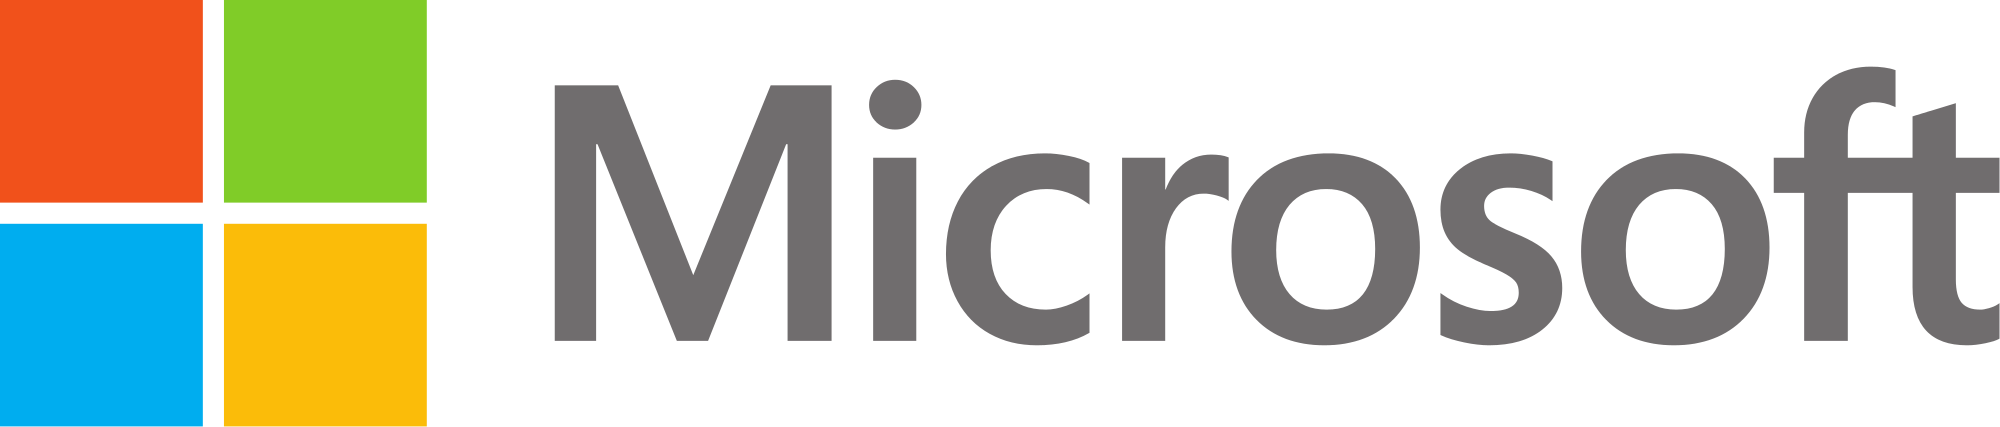 Microsoft_logo_(2012).png